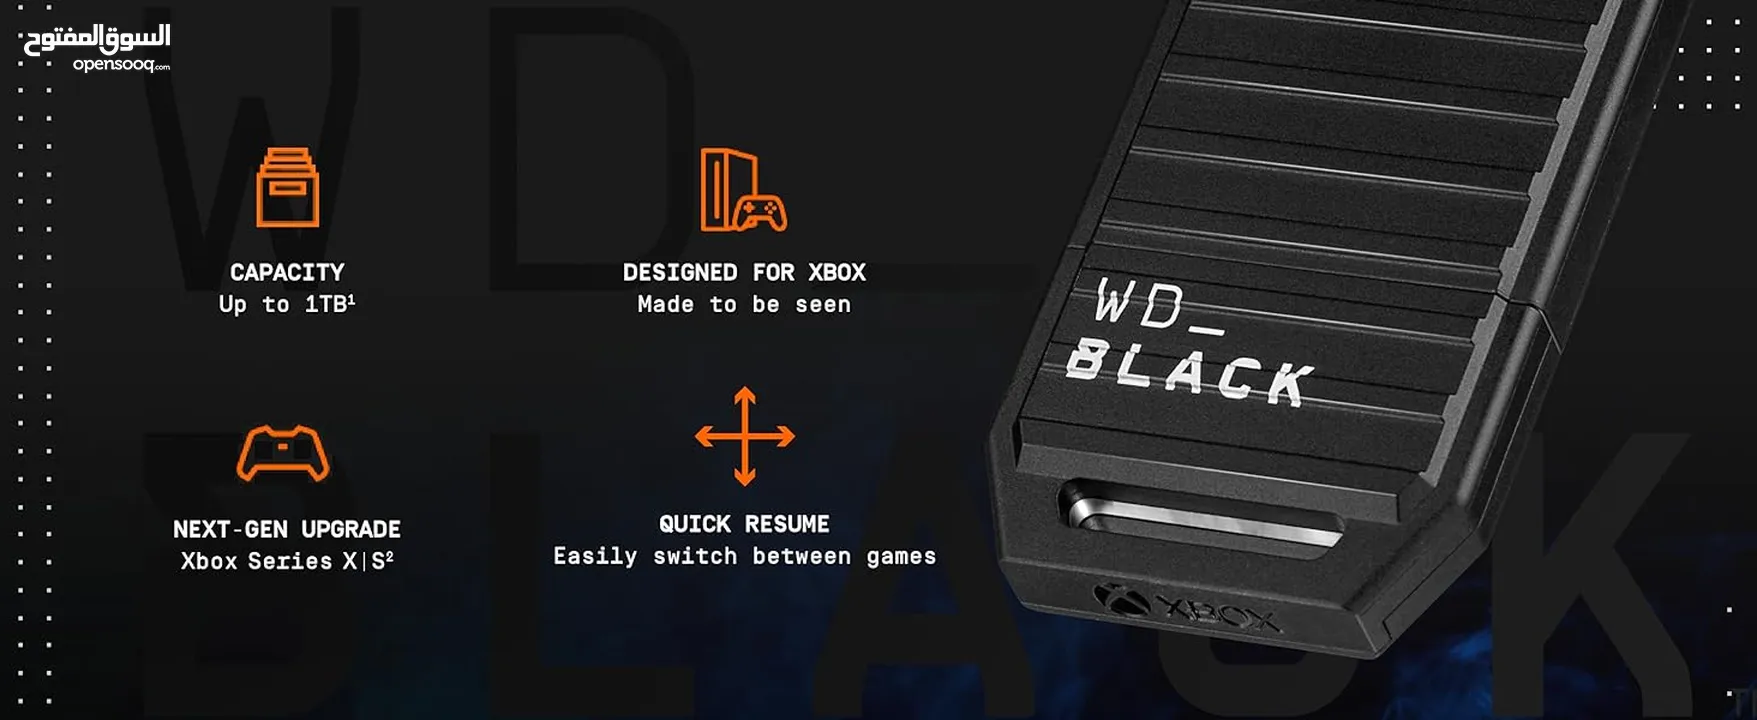 WD_BLACK 512GB C50 Expansion Card ذاكرة تخزين للاكسبوكس